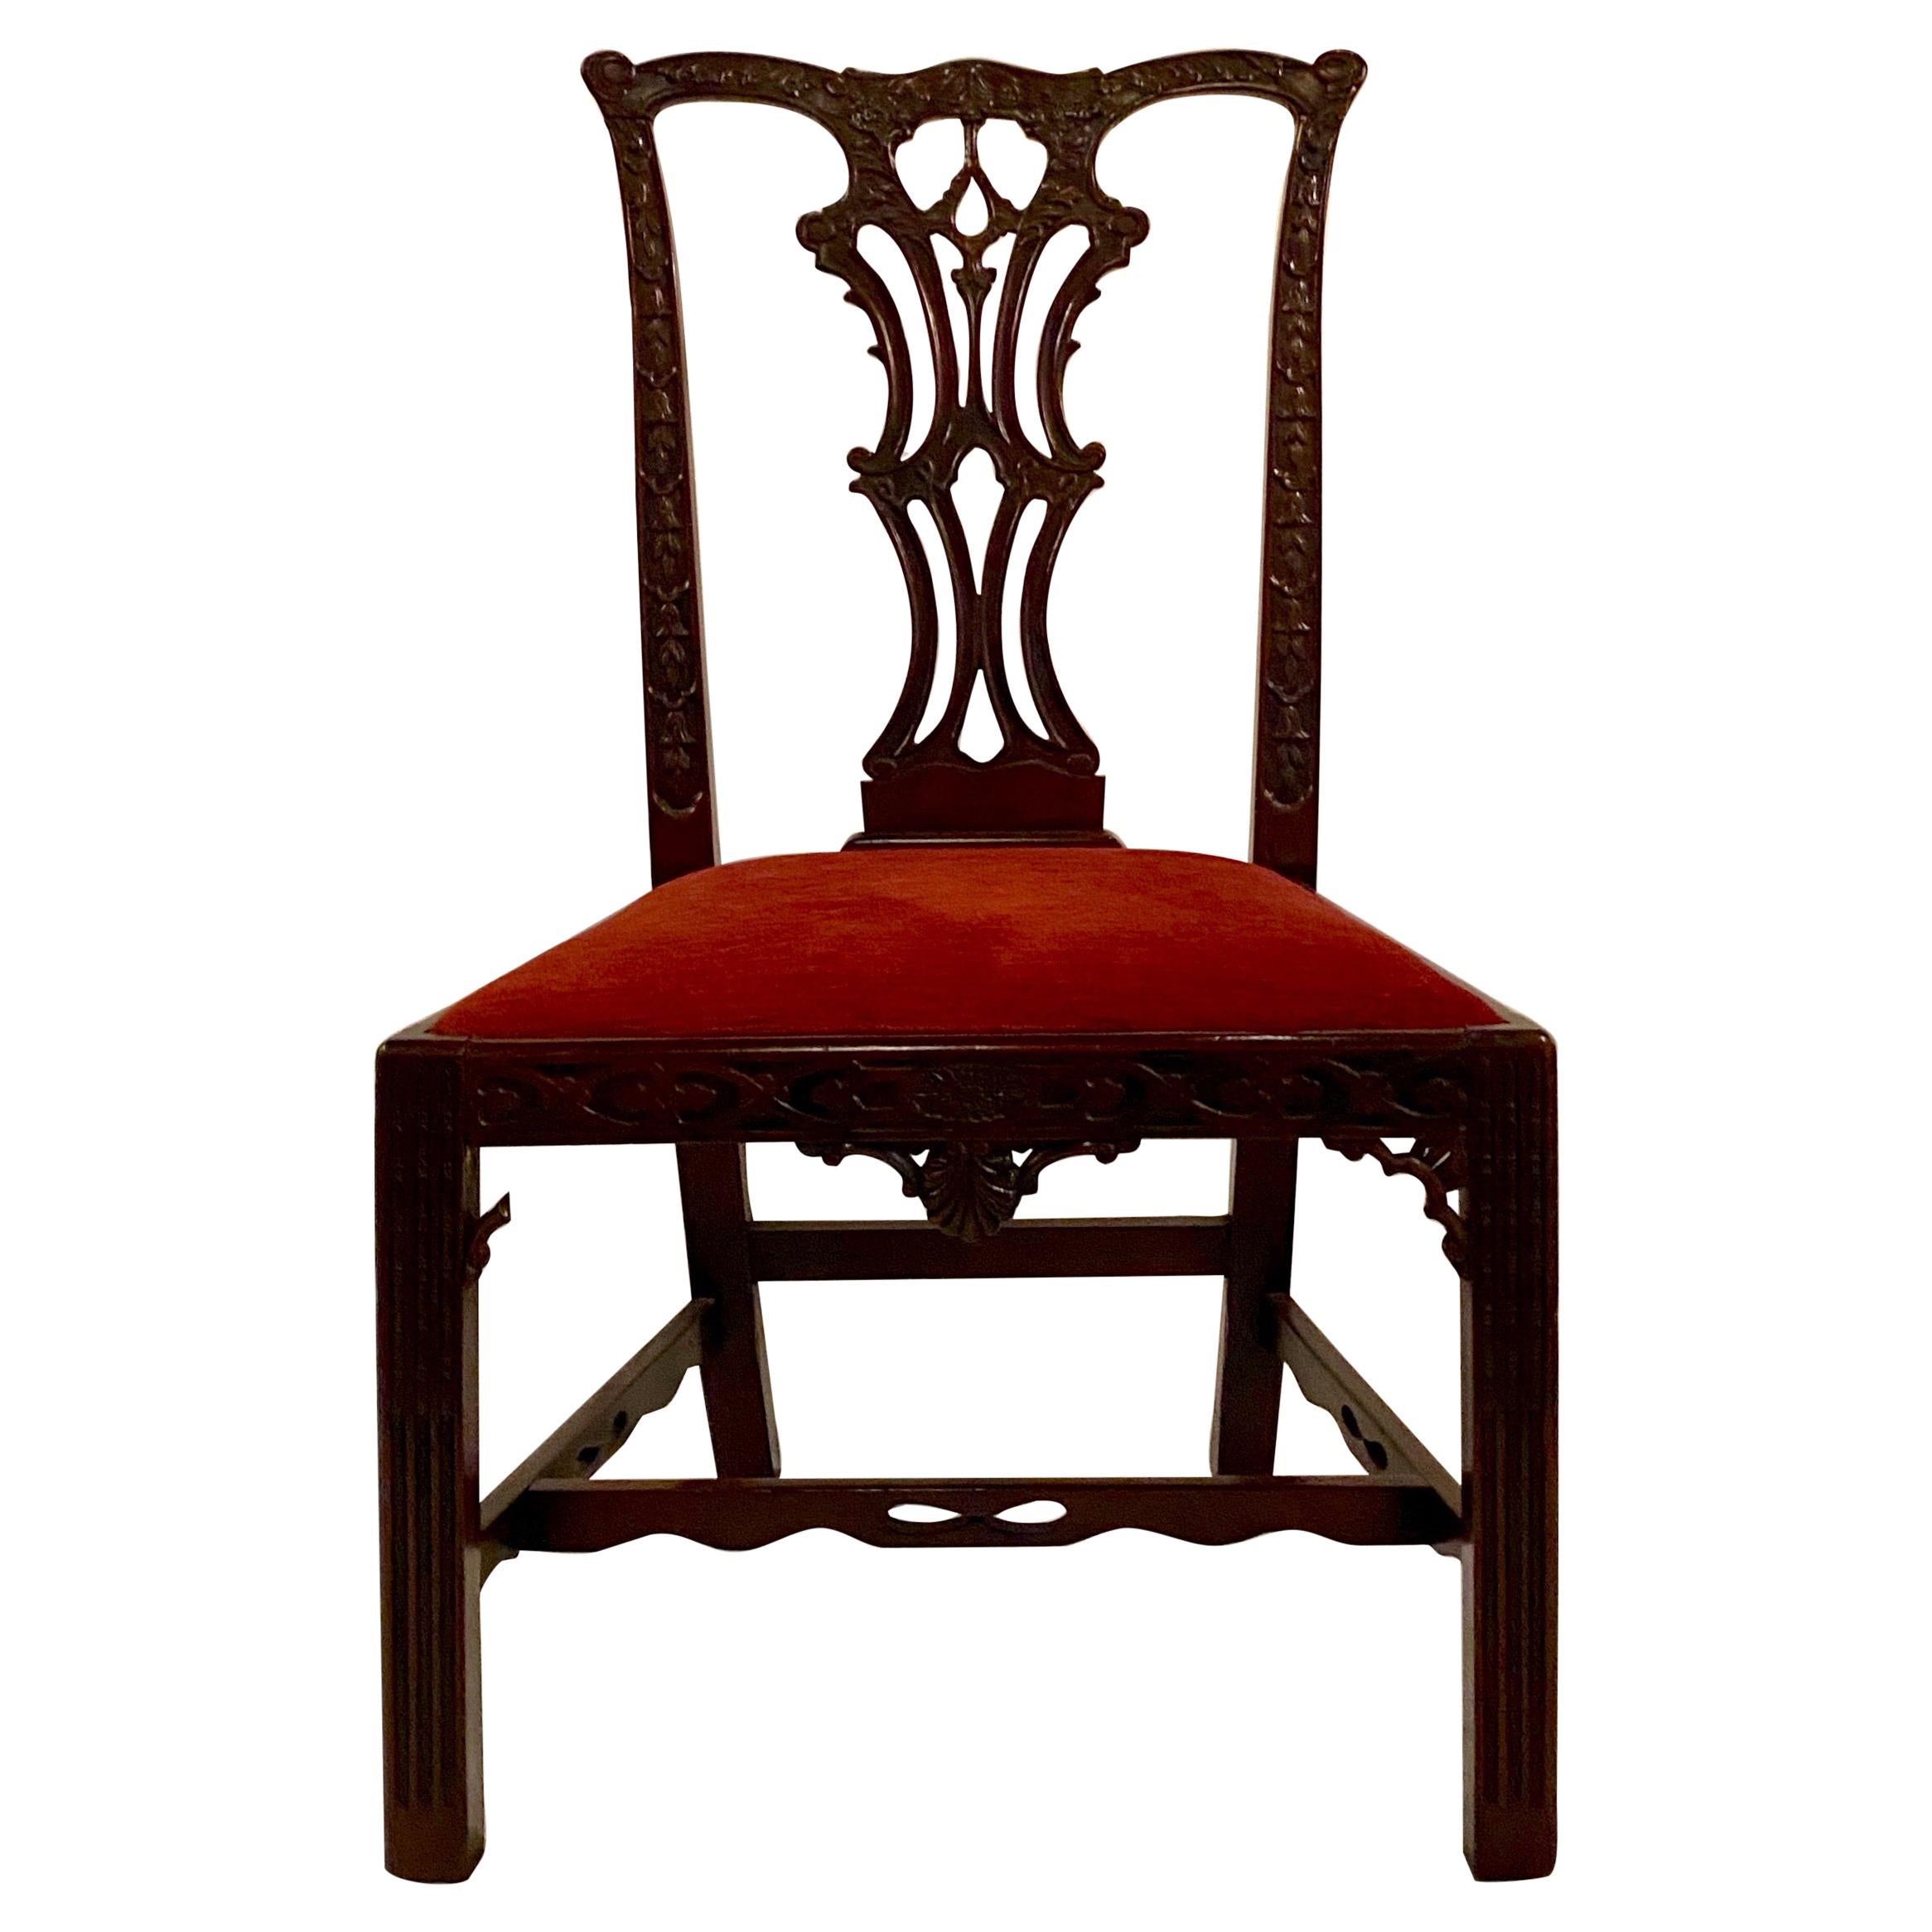 Antique English Mahogany Chair Fretwork Design Chippendale, circa 1870-1880 For Sale